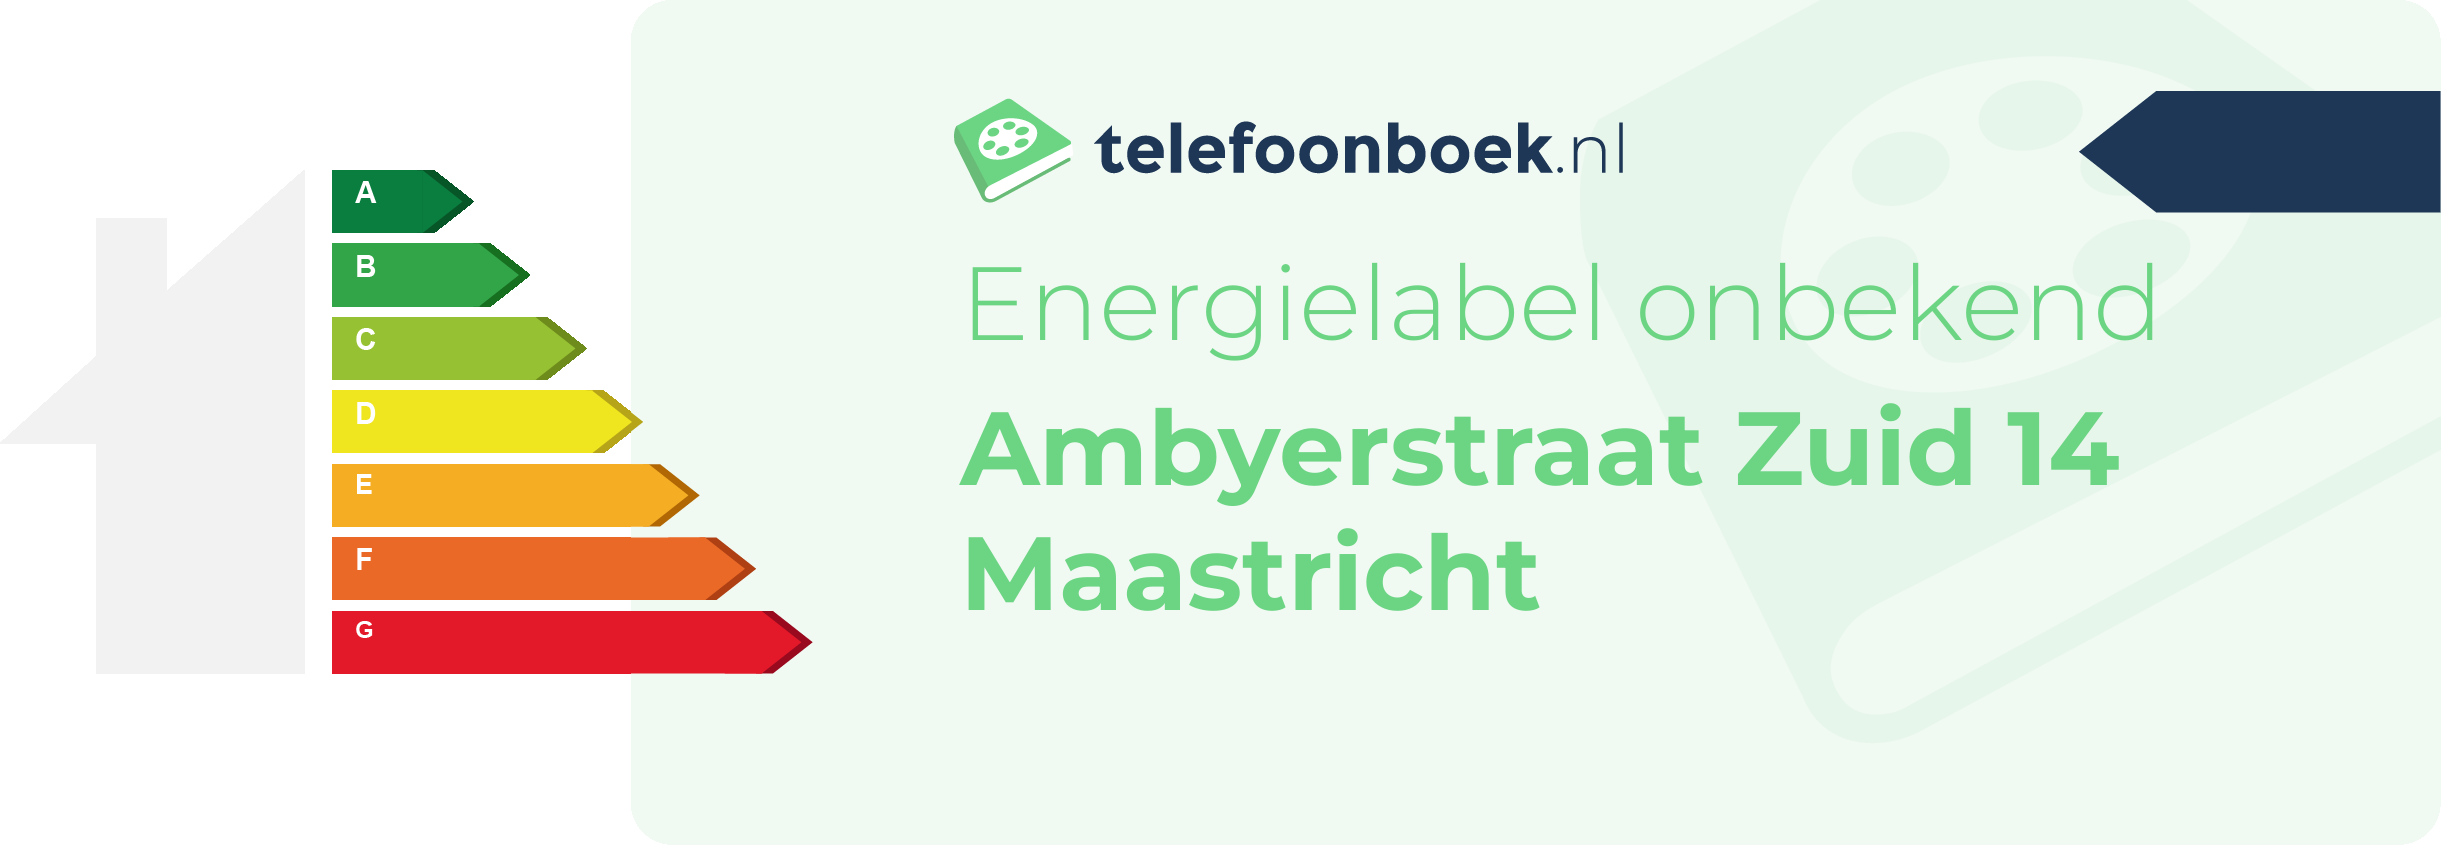 Energielabel Ambyerstraat Zuid 14 Maastricht